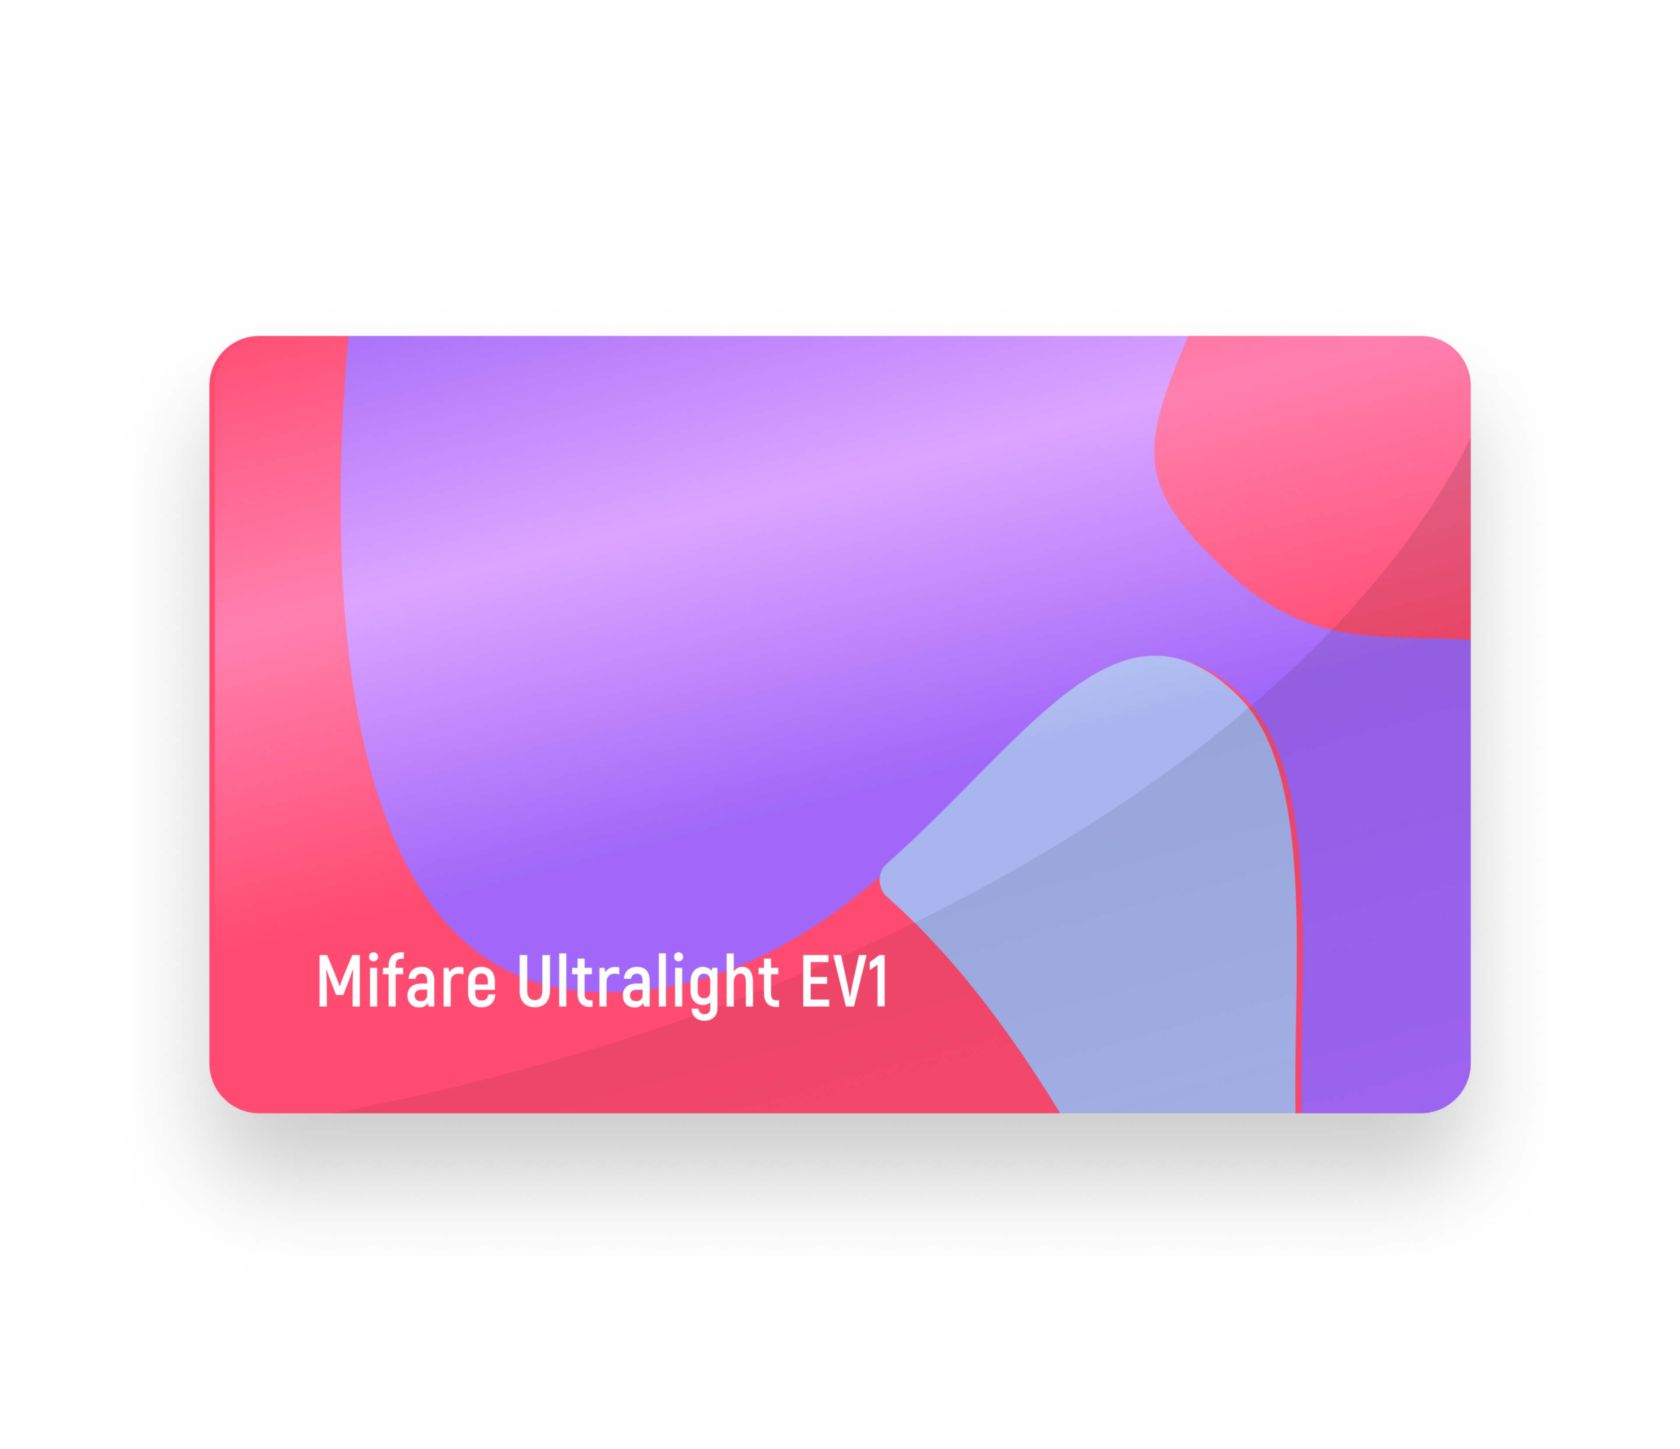 Mifare Ultralight EV1